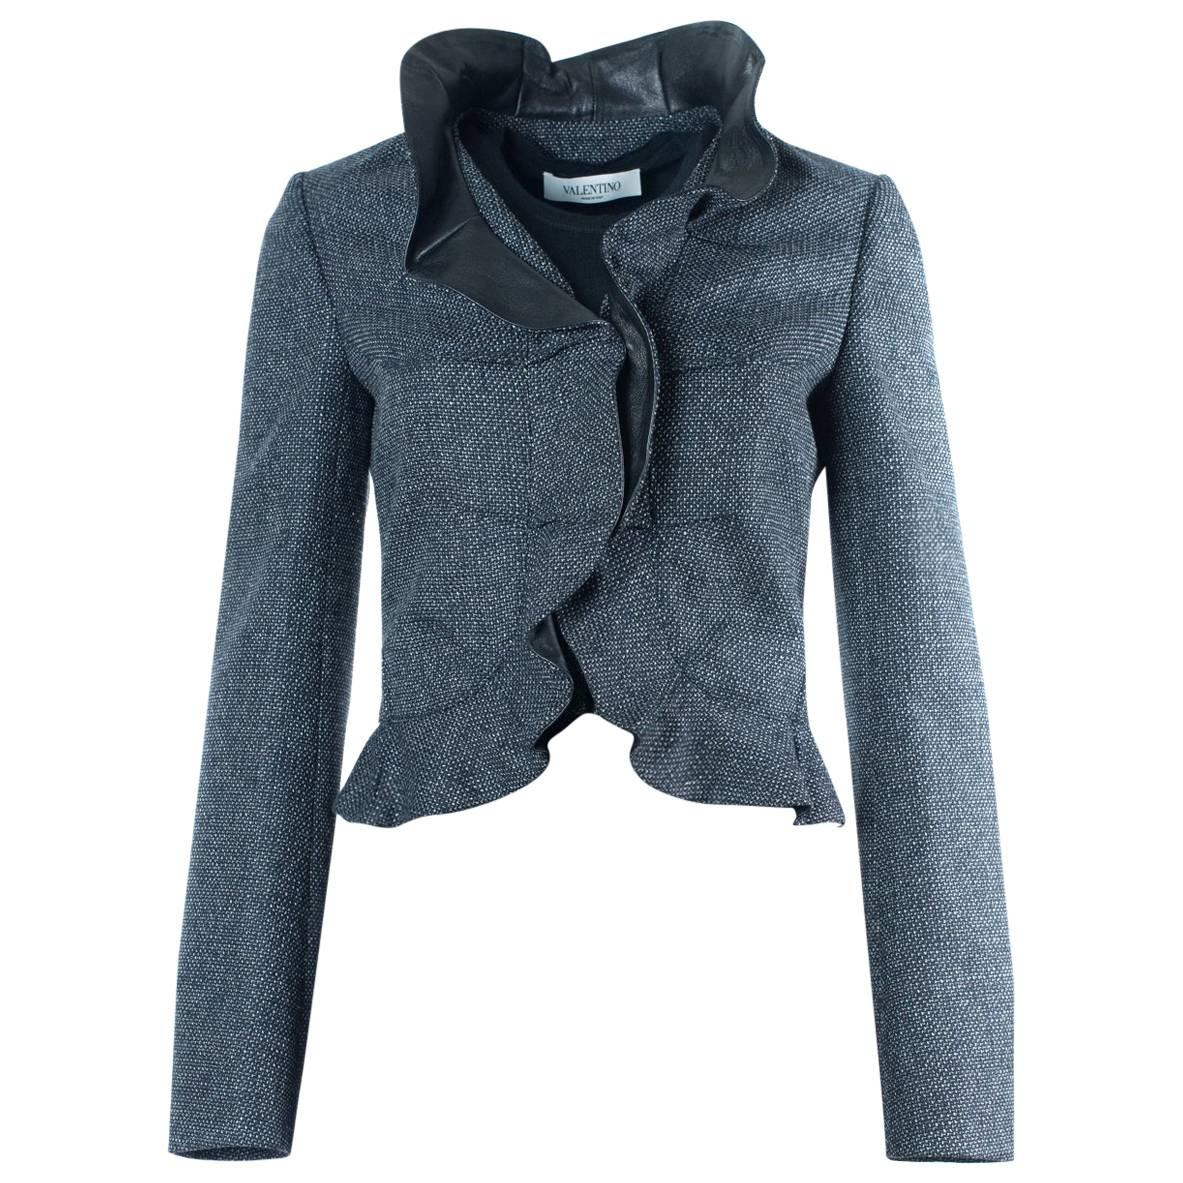 Valentino Women's Gray Tweed Ruffle Jacket 